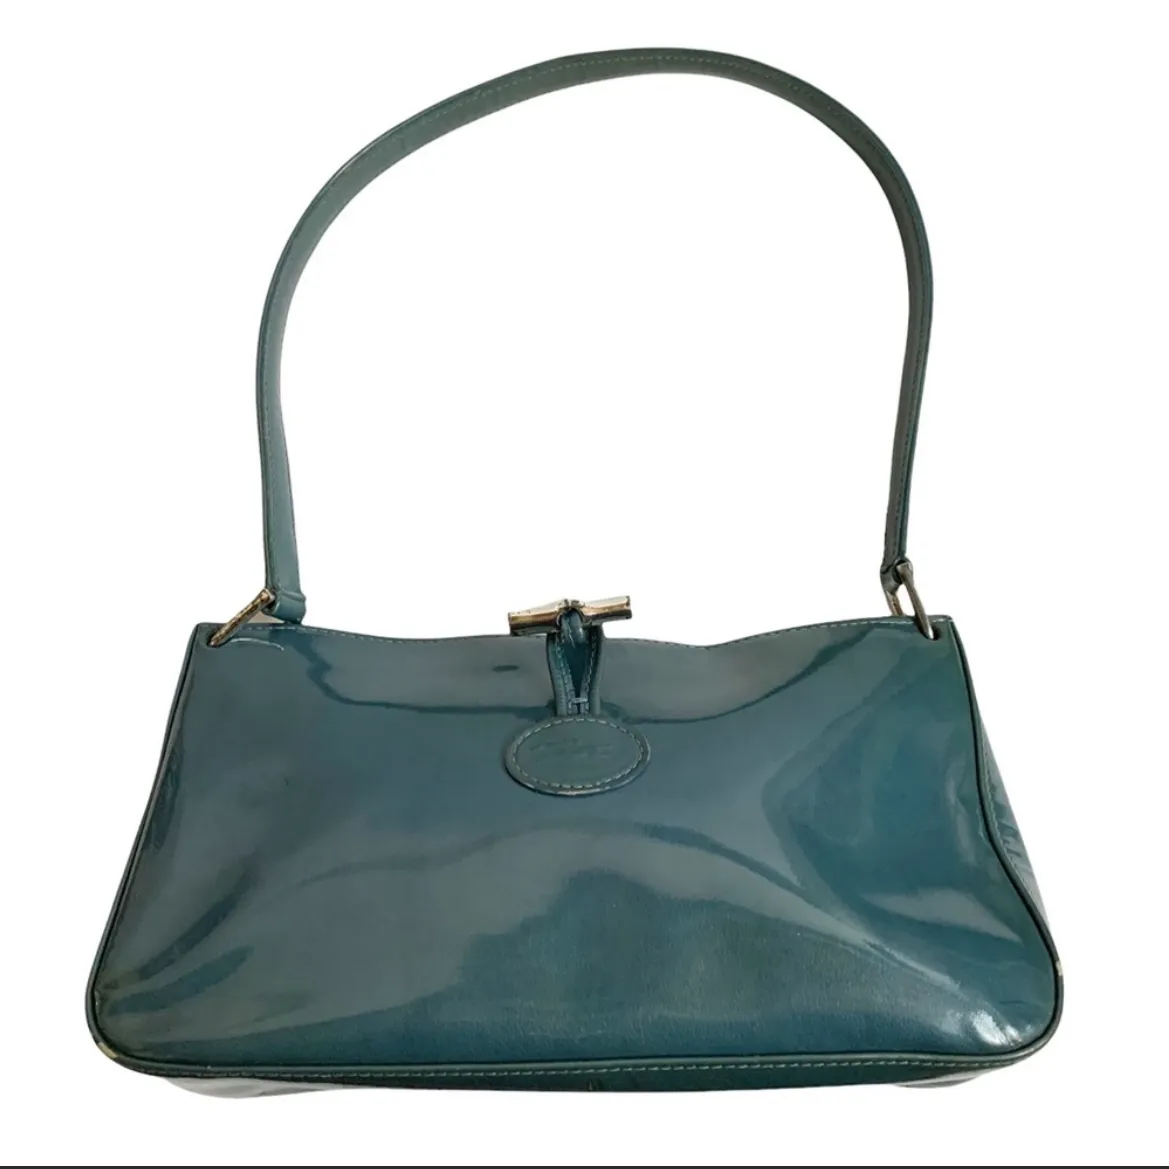 Longchamp Teal Leather Bag - Vintage photo 1